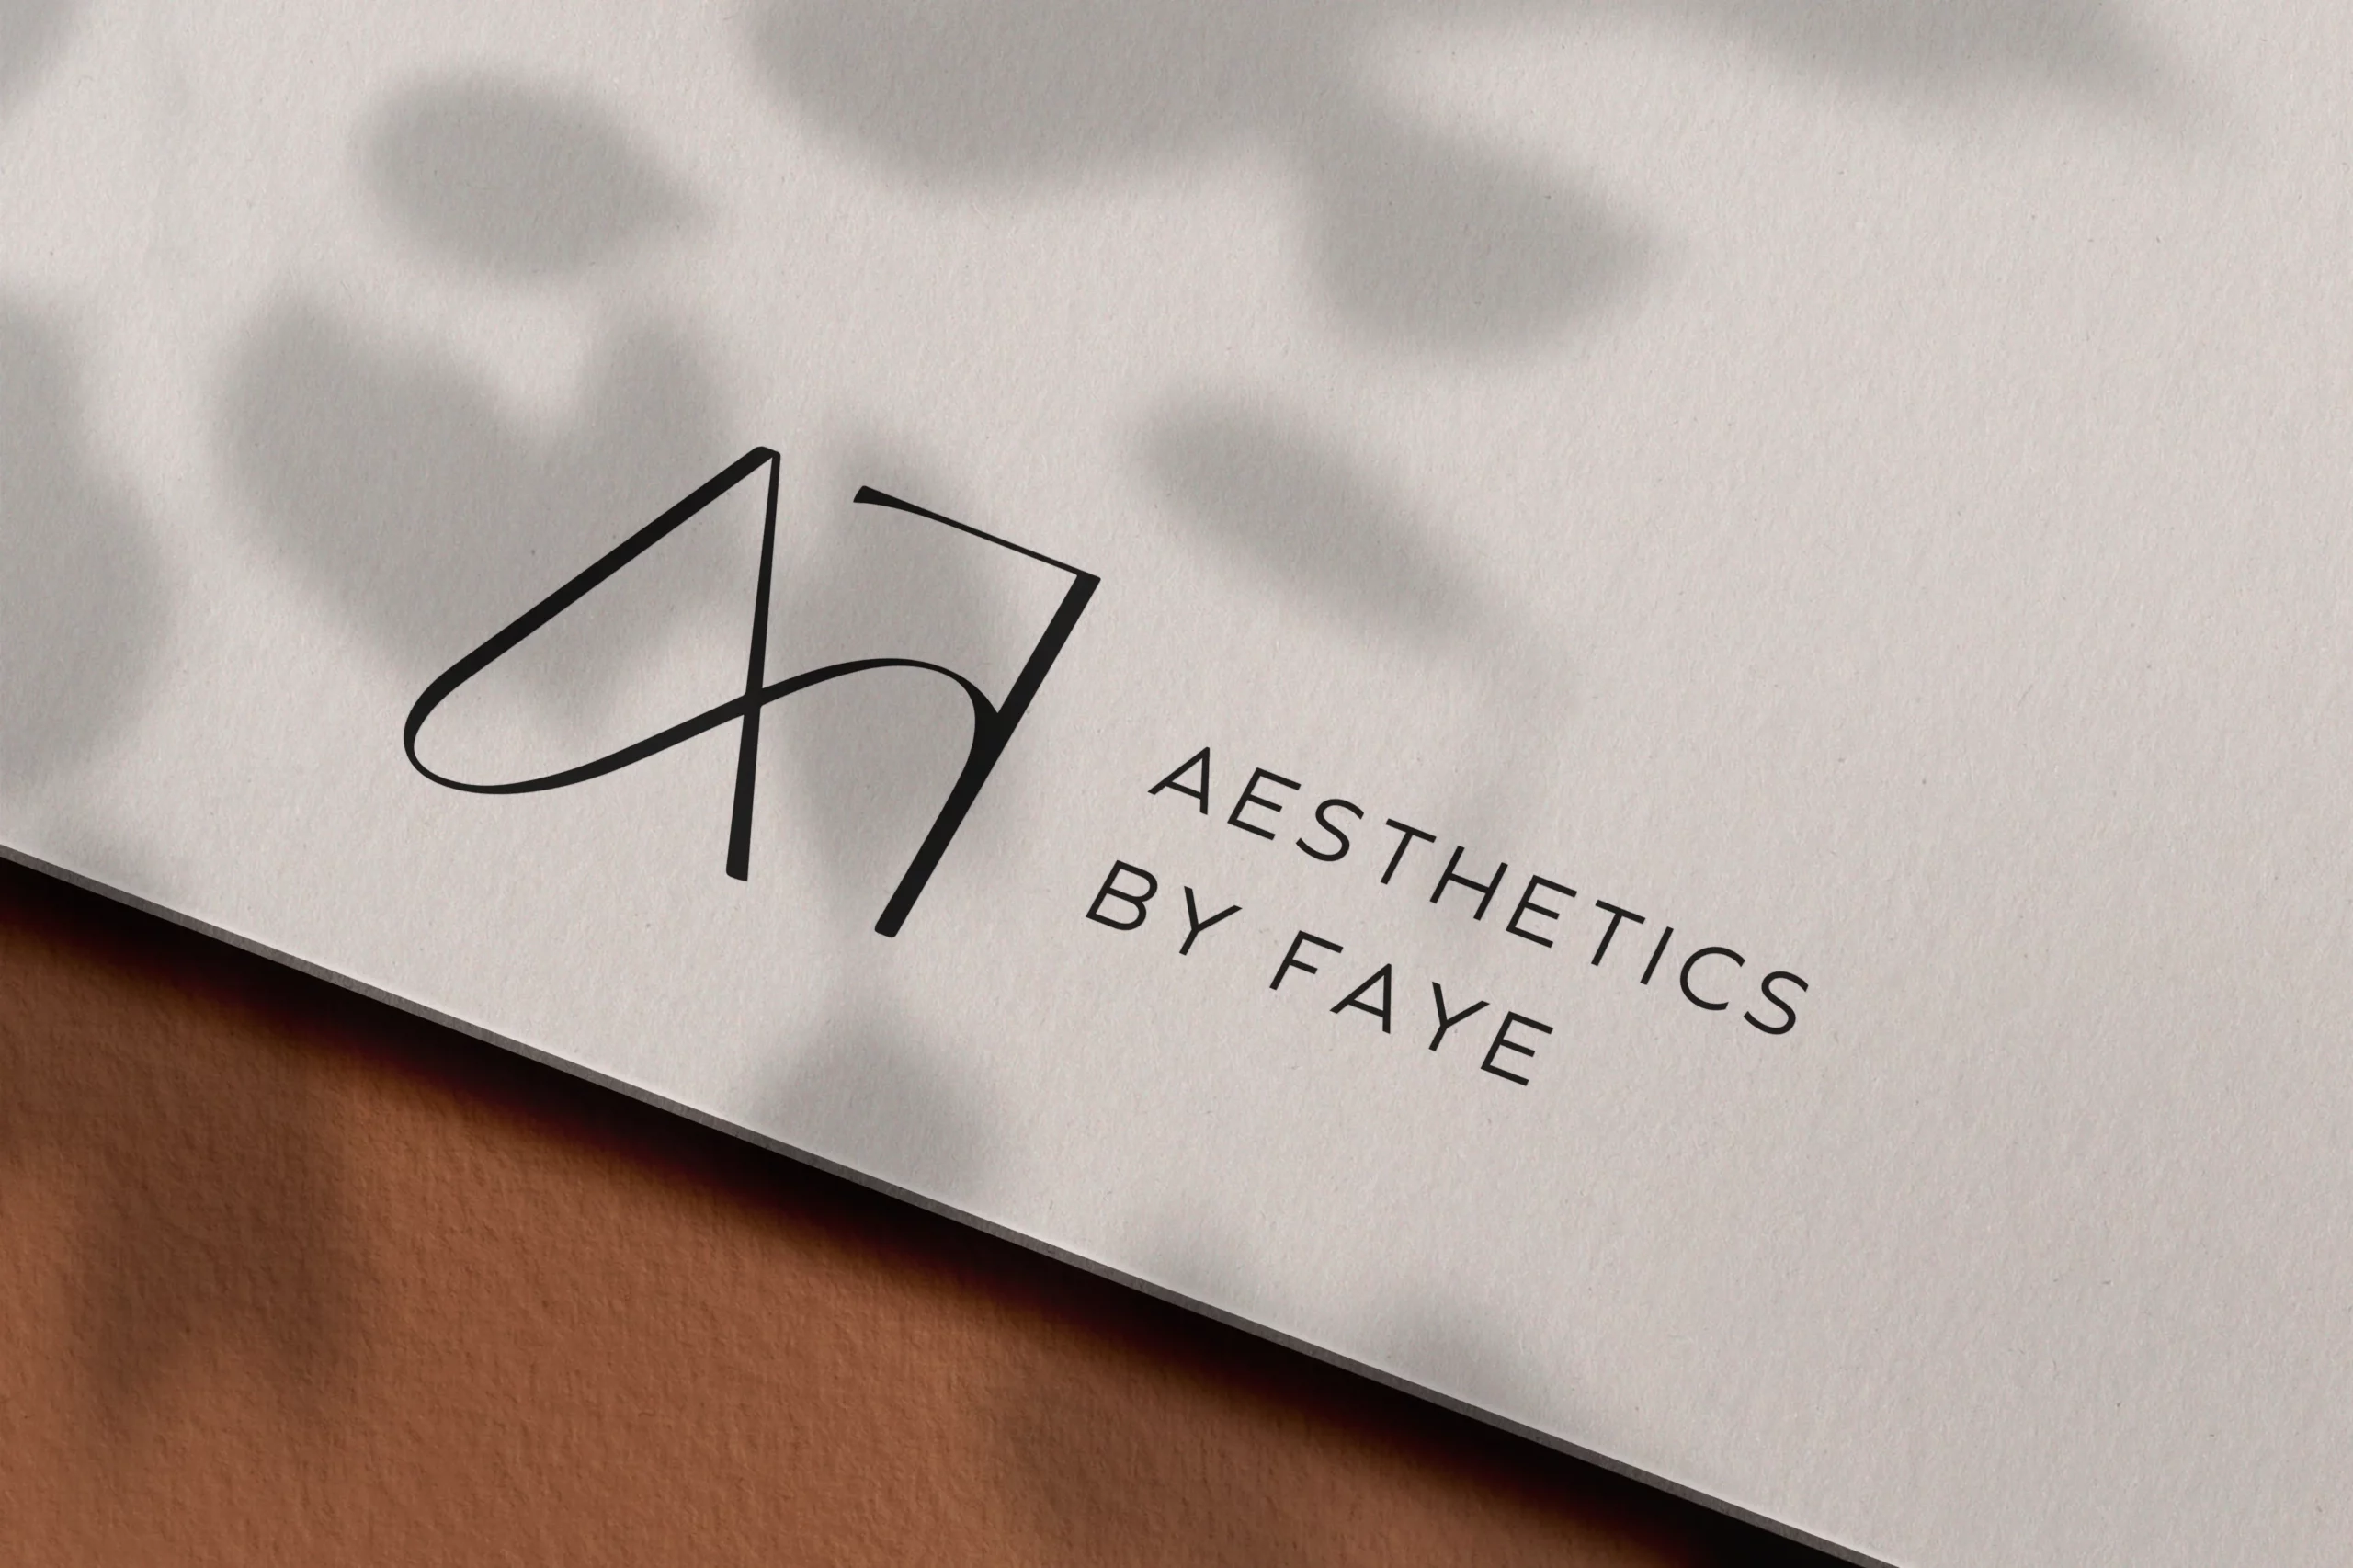 Aesthetics by Faye